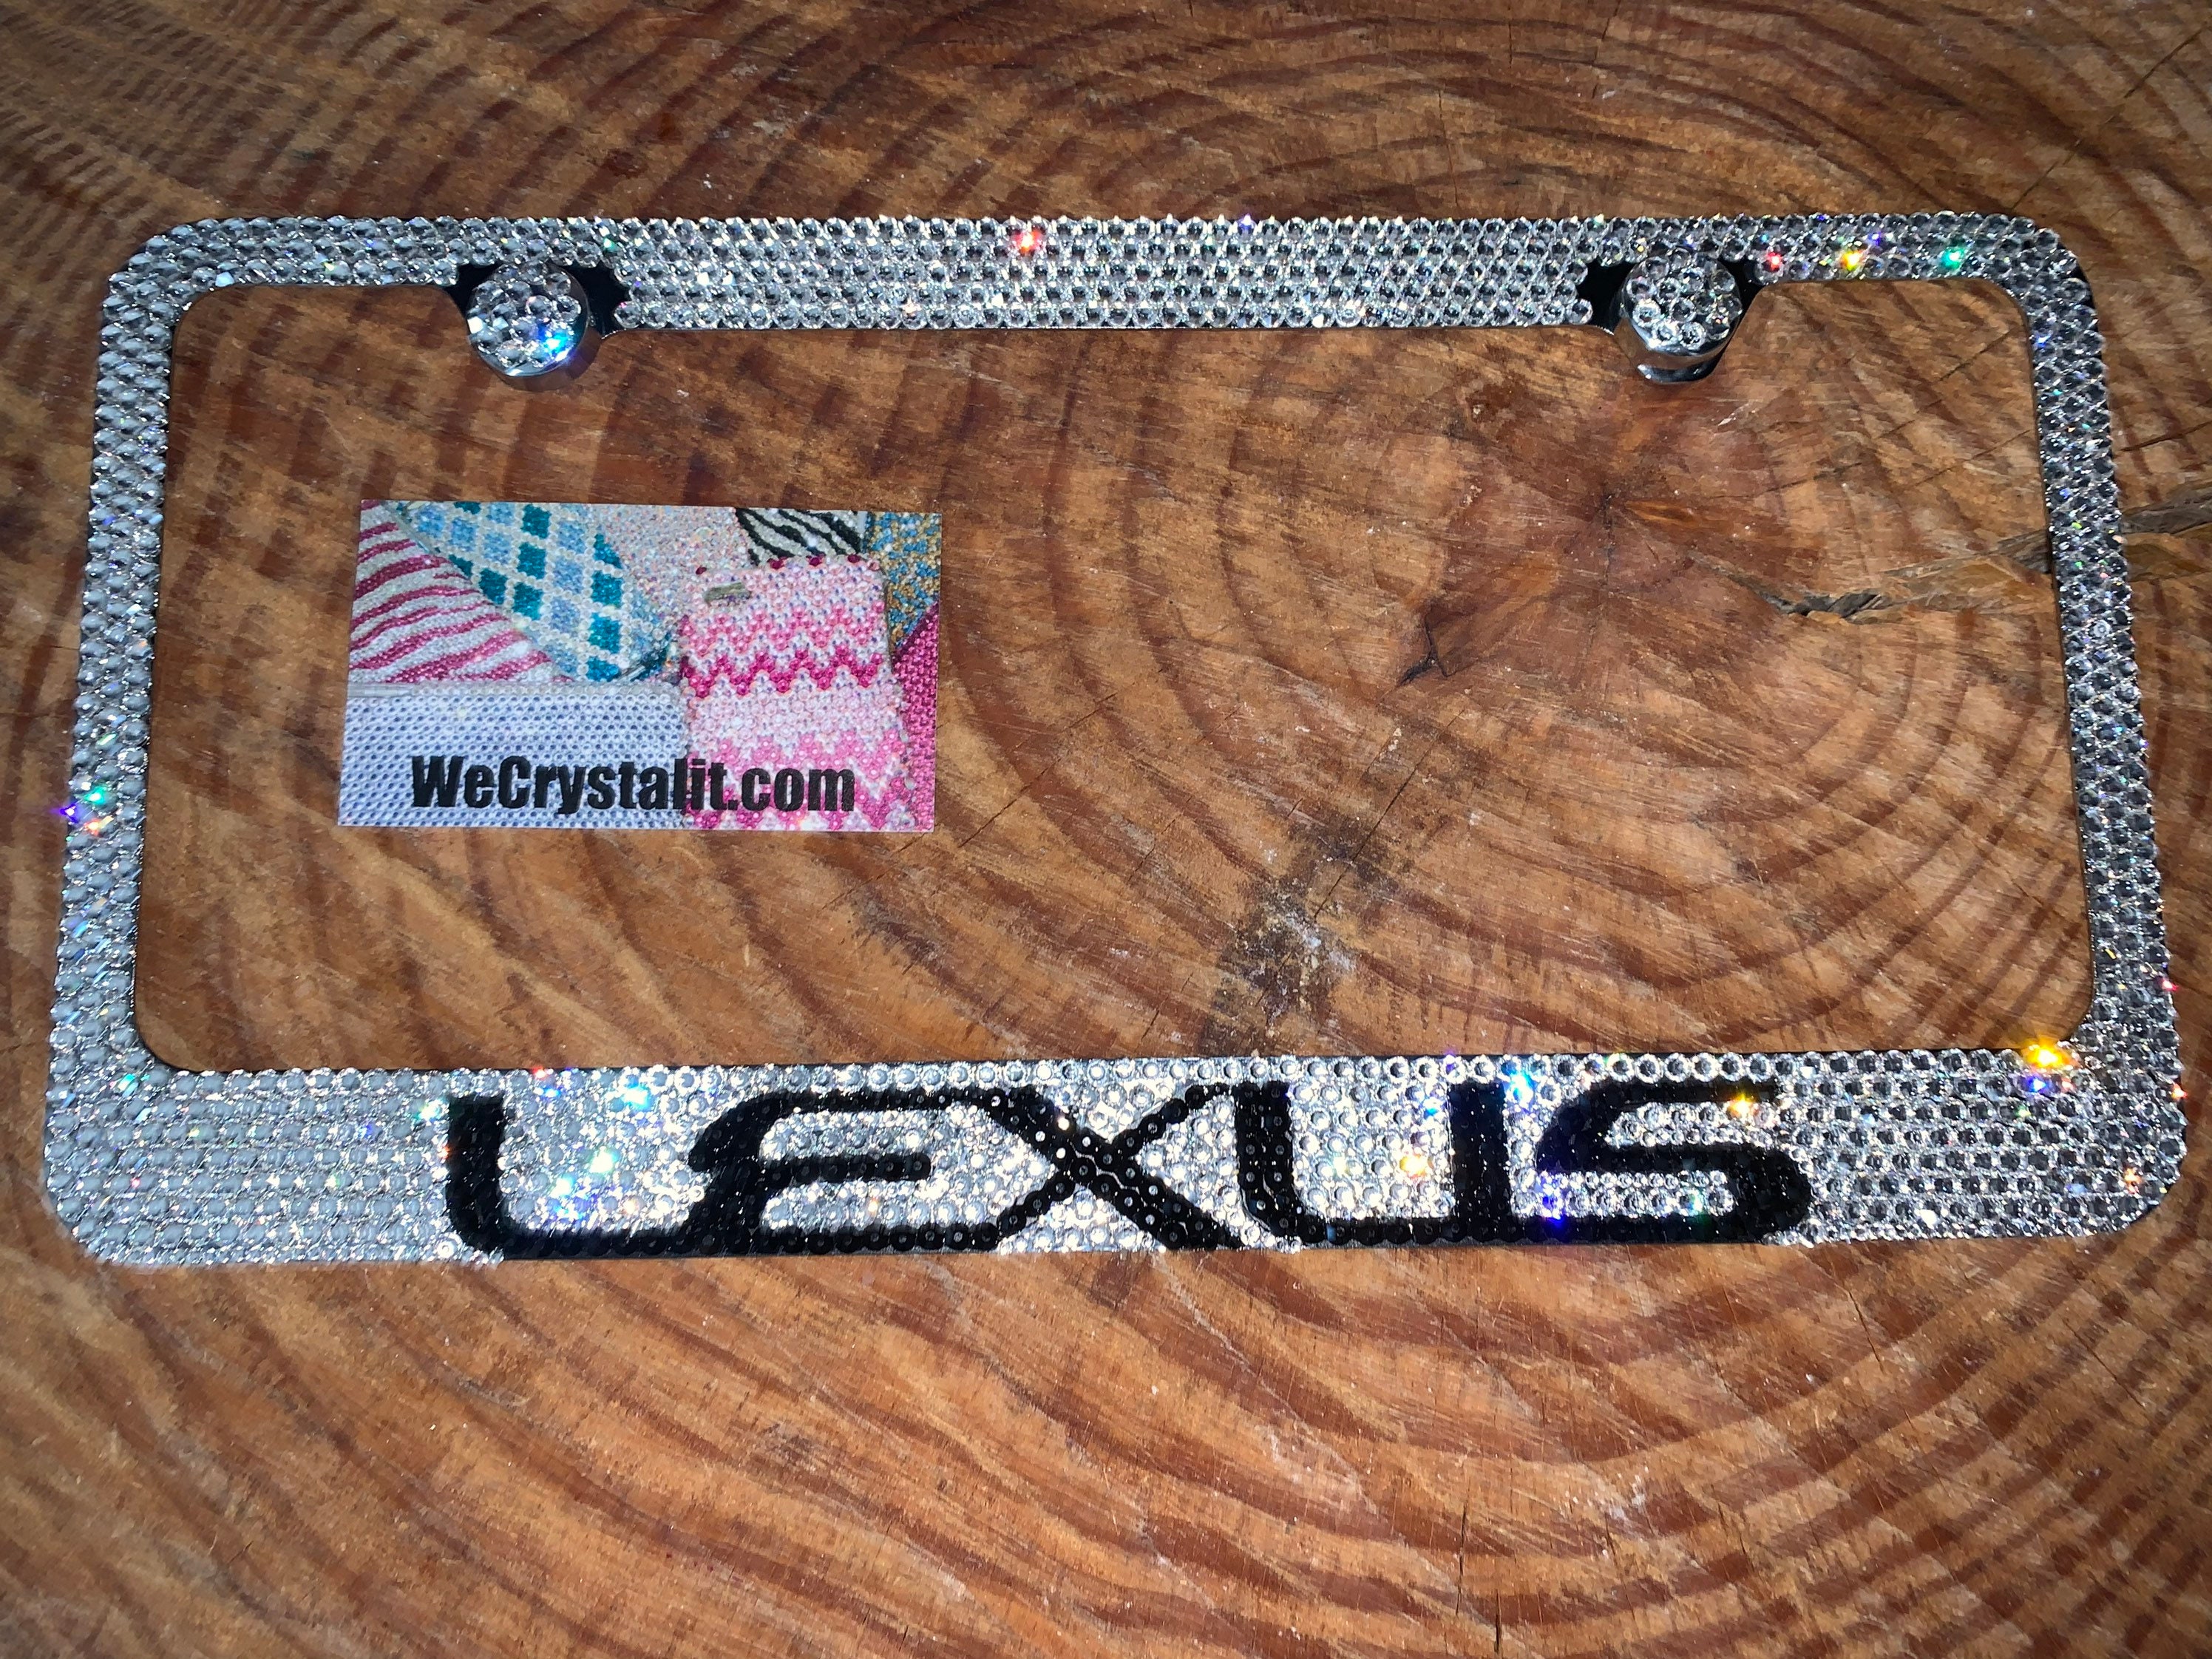 Lexus Emblem Automotive Tissue Box Case Black Made of Luxury